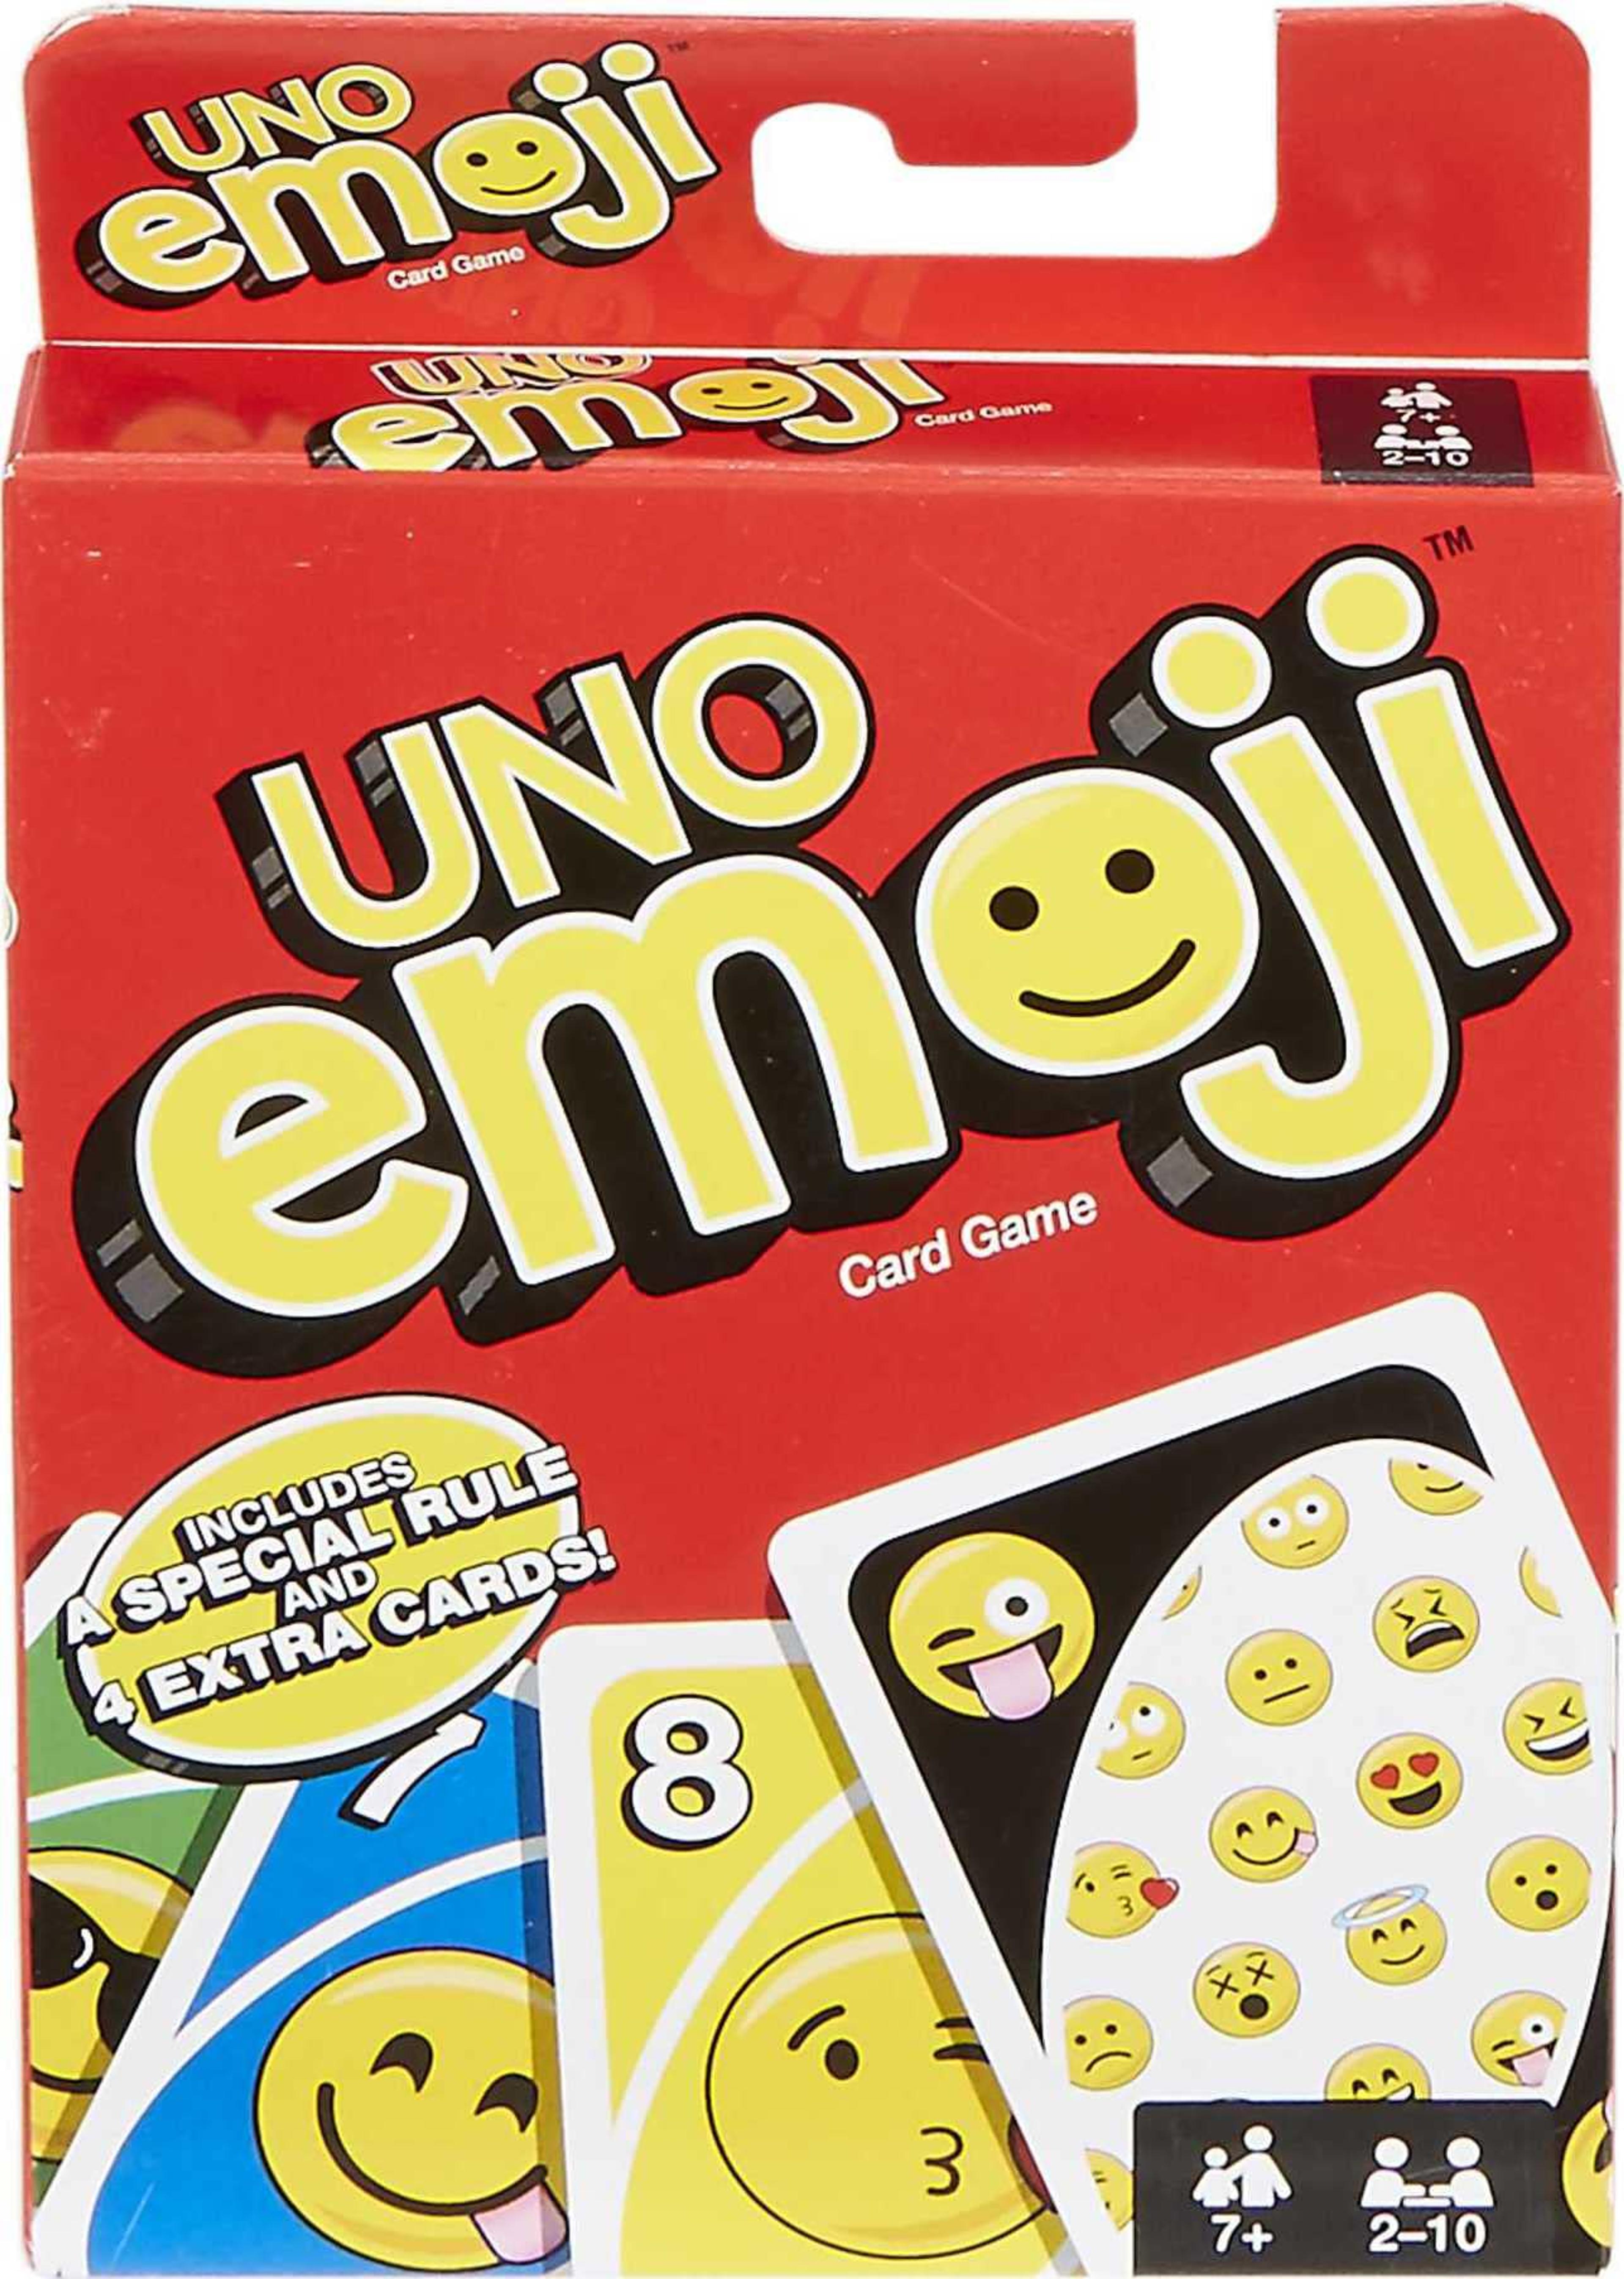 Mattel Games UNO Emojis Multicolor Basic Pack